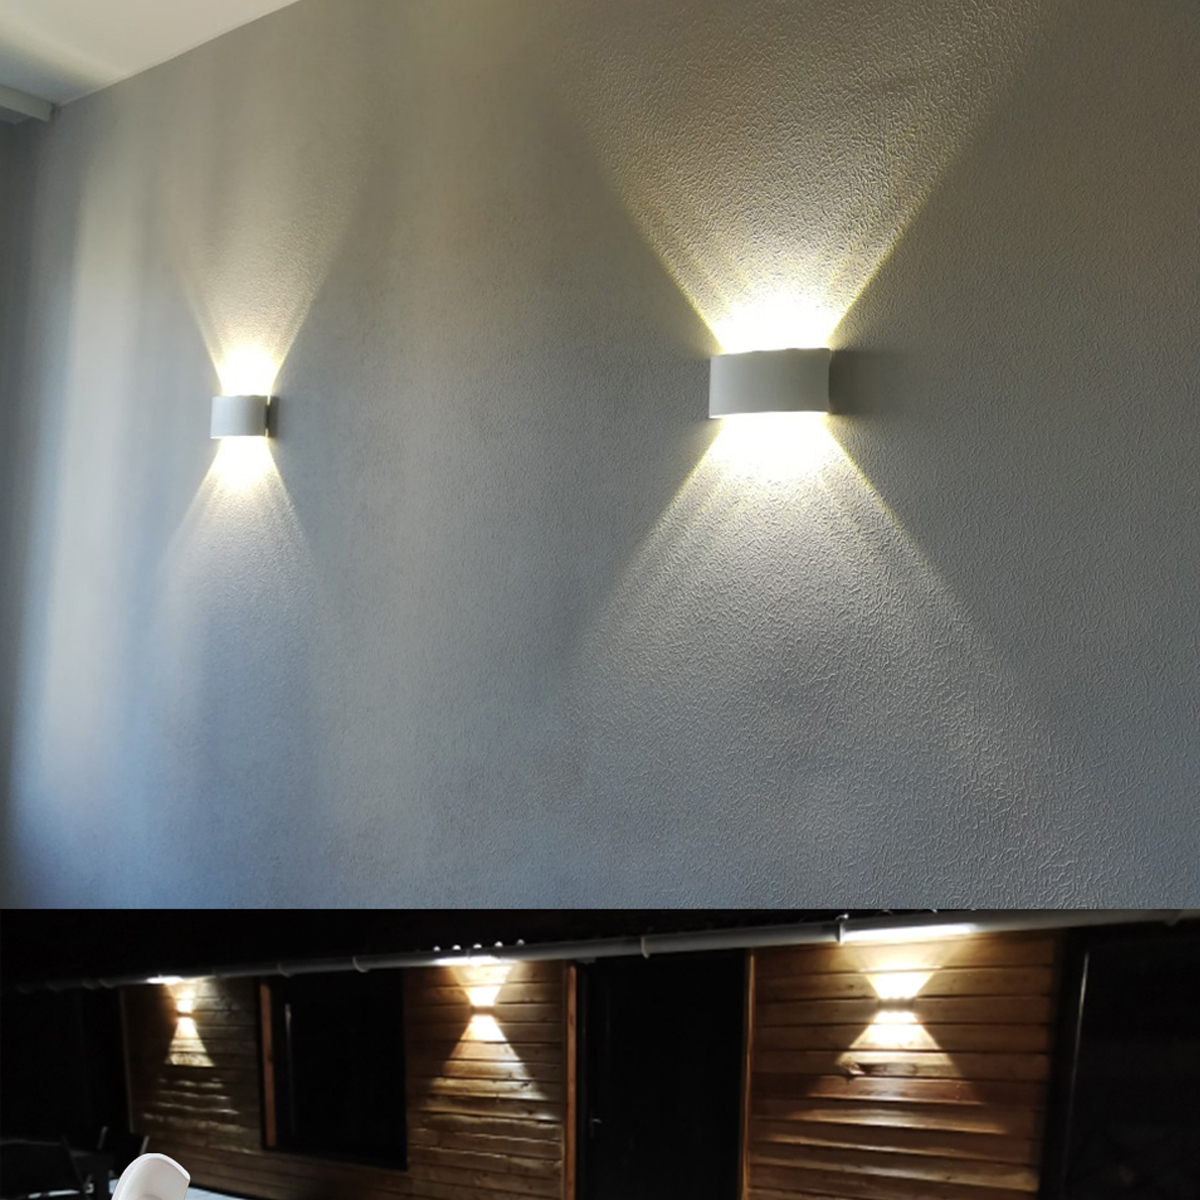 Waterproof-2-8W-LED-Wall-Light-Up-Down-Lighting-Sconce-Lamp-Indoor-Outdoor-IP65-1850910-16